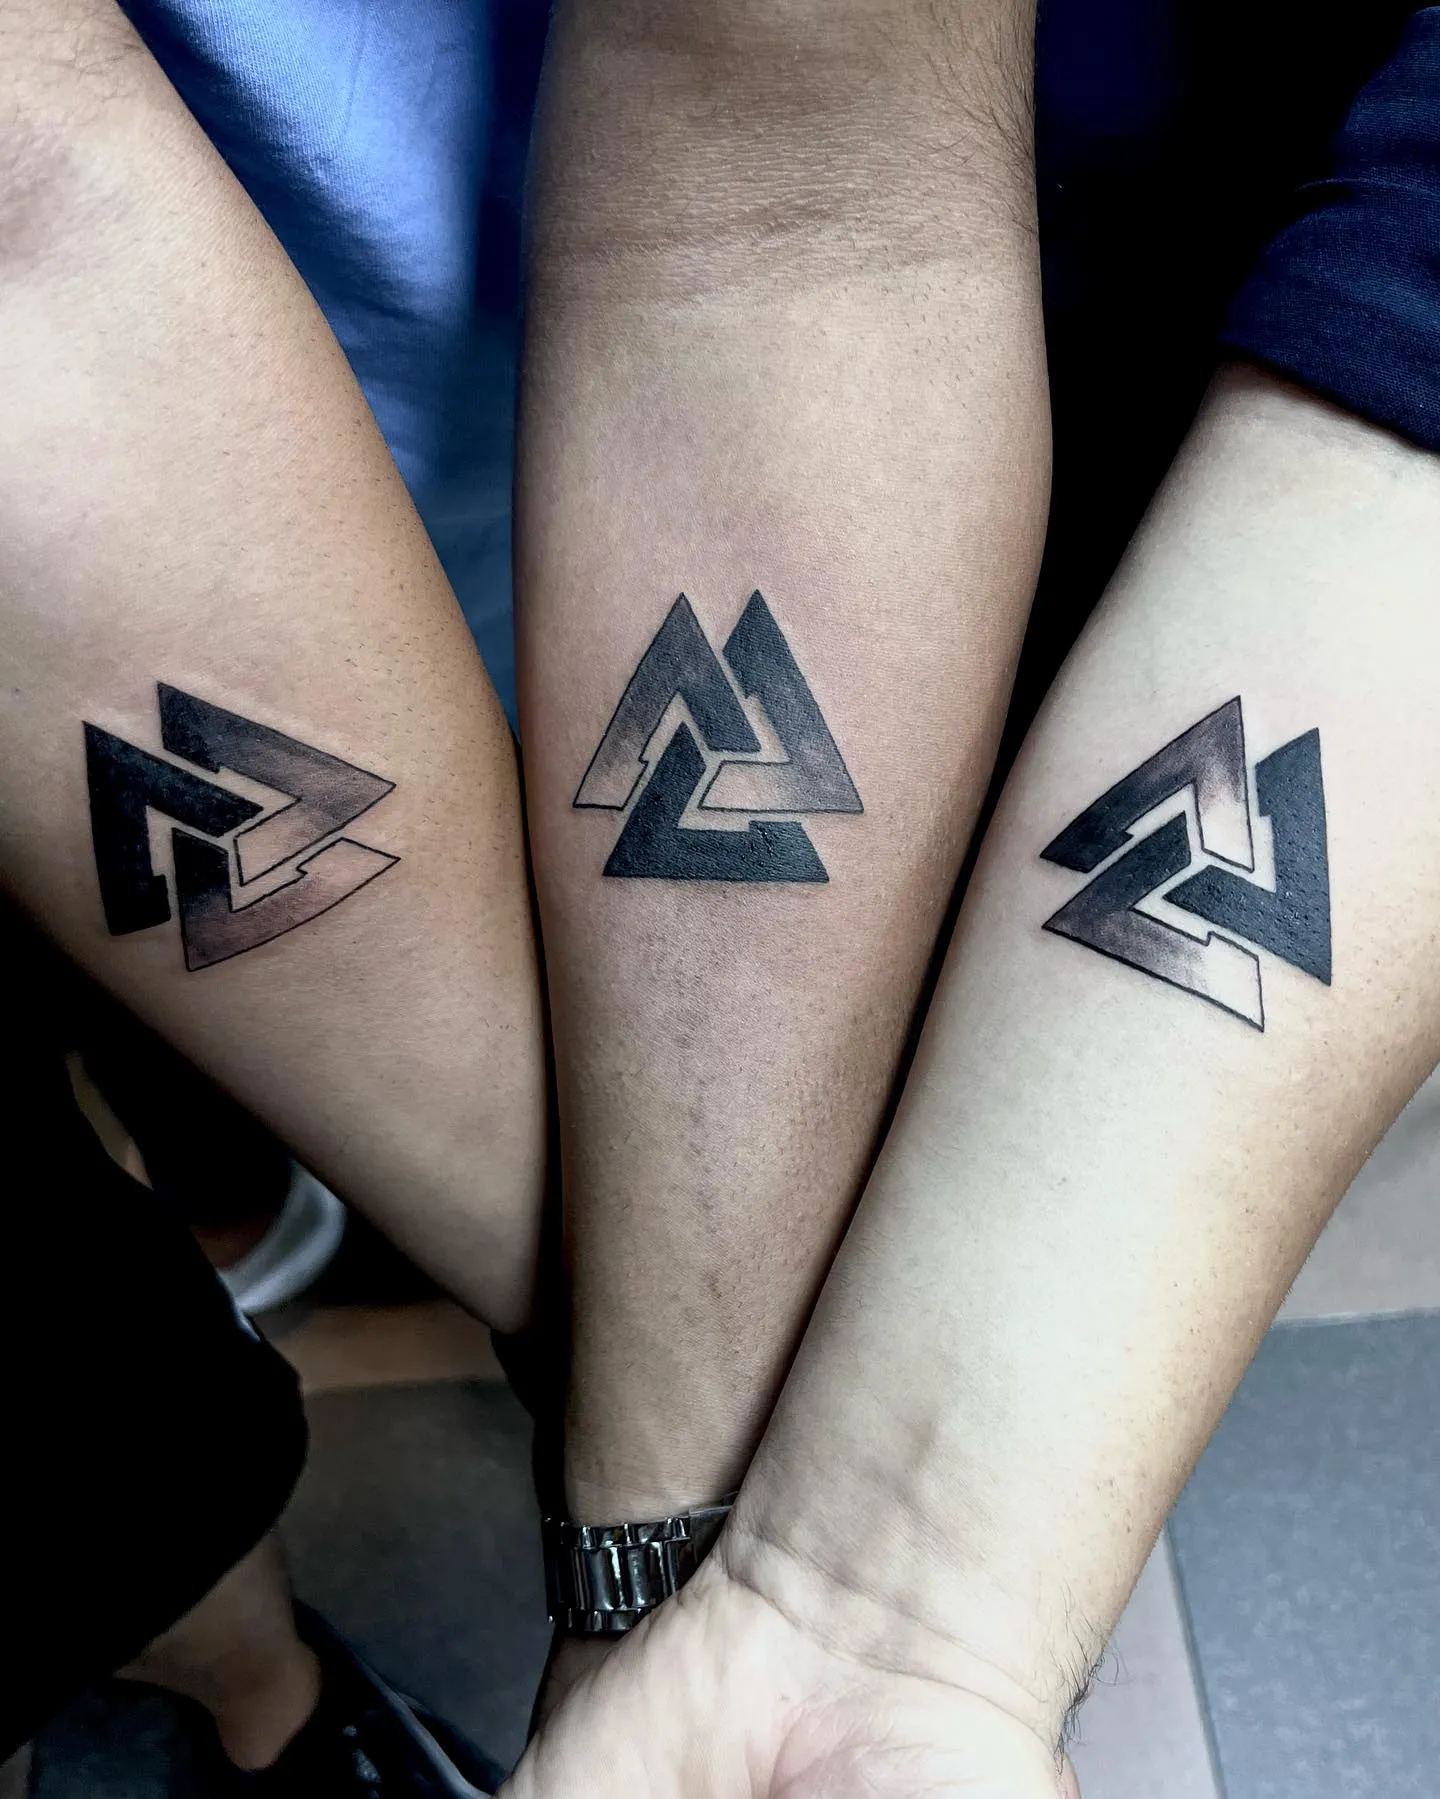 Matching Triangular Tattoos Show Unity and Bond